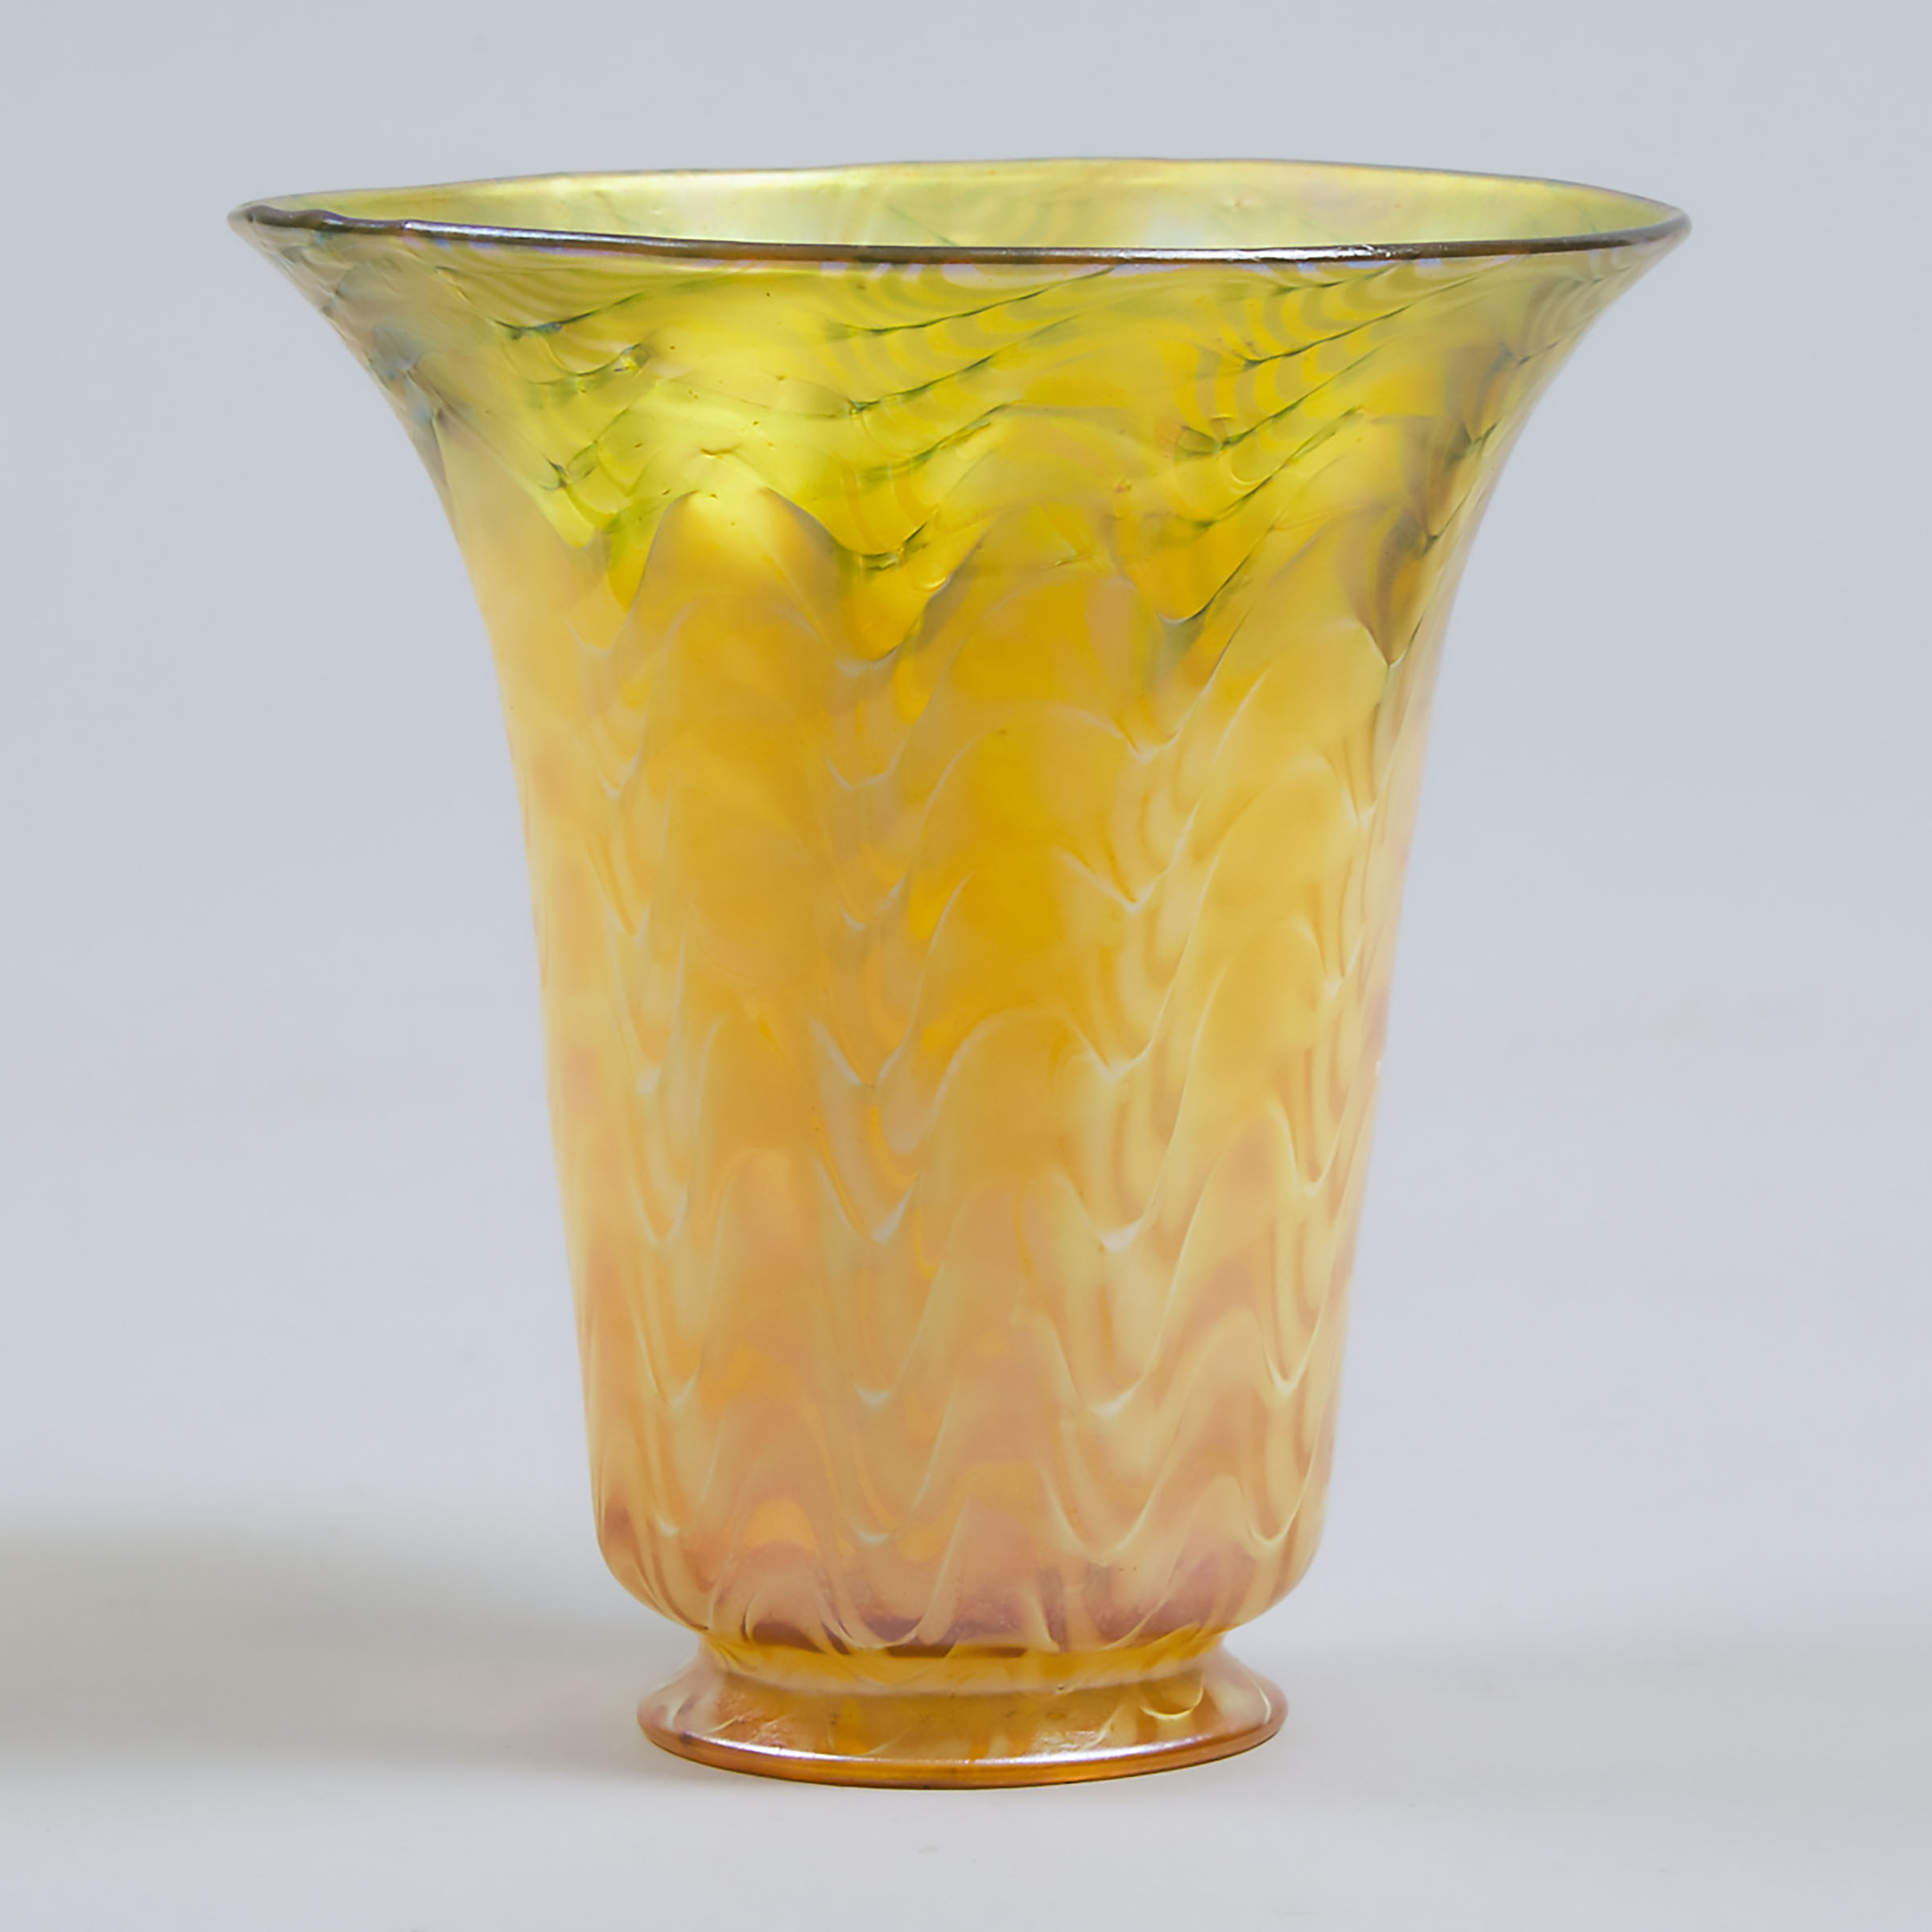 Quezal Iridescent Glass Shade, early 20th century